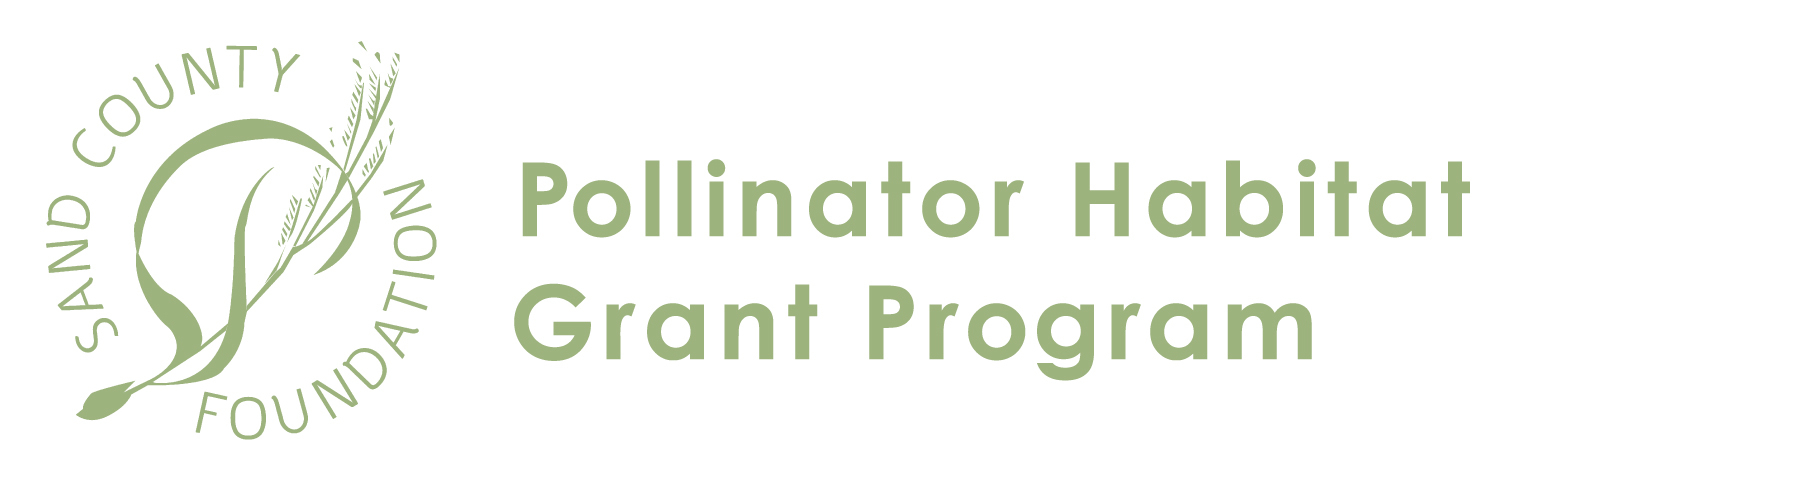 Pollinator Habitat Grant Program 01